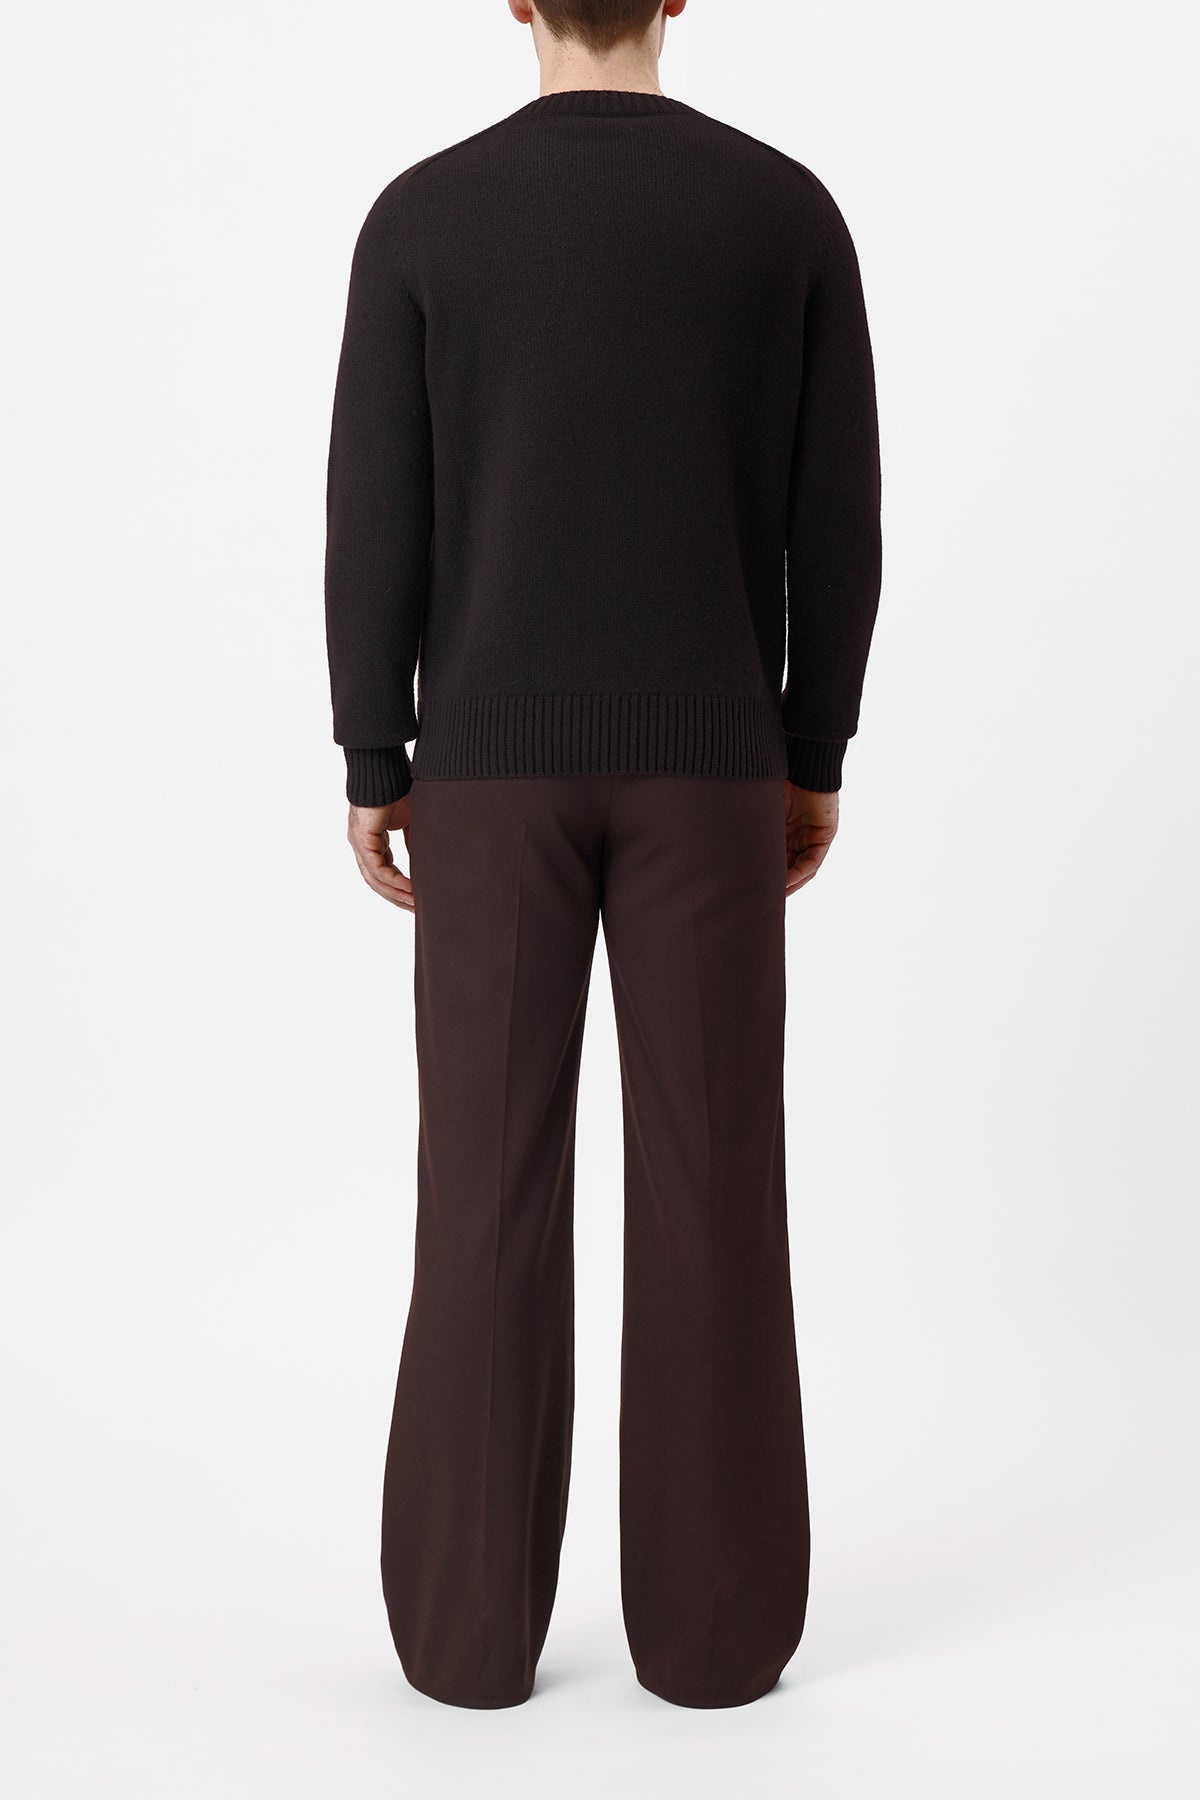 Daniel Knit Sweater in Chocolate Cashmere - 4